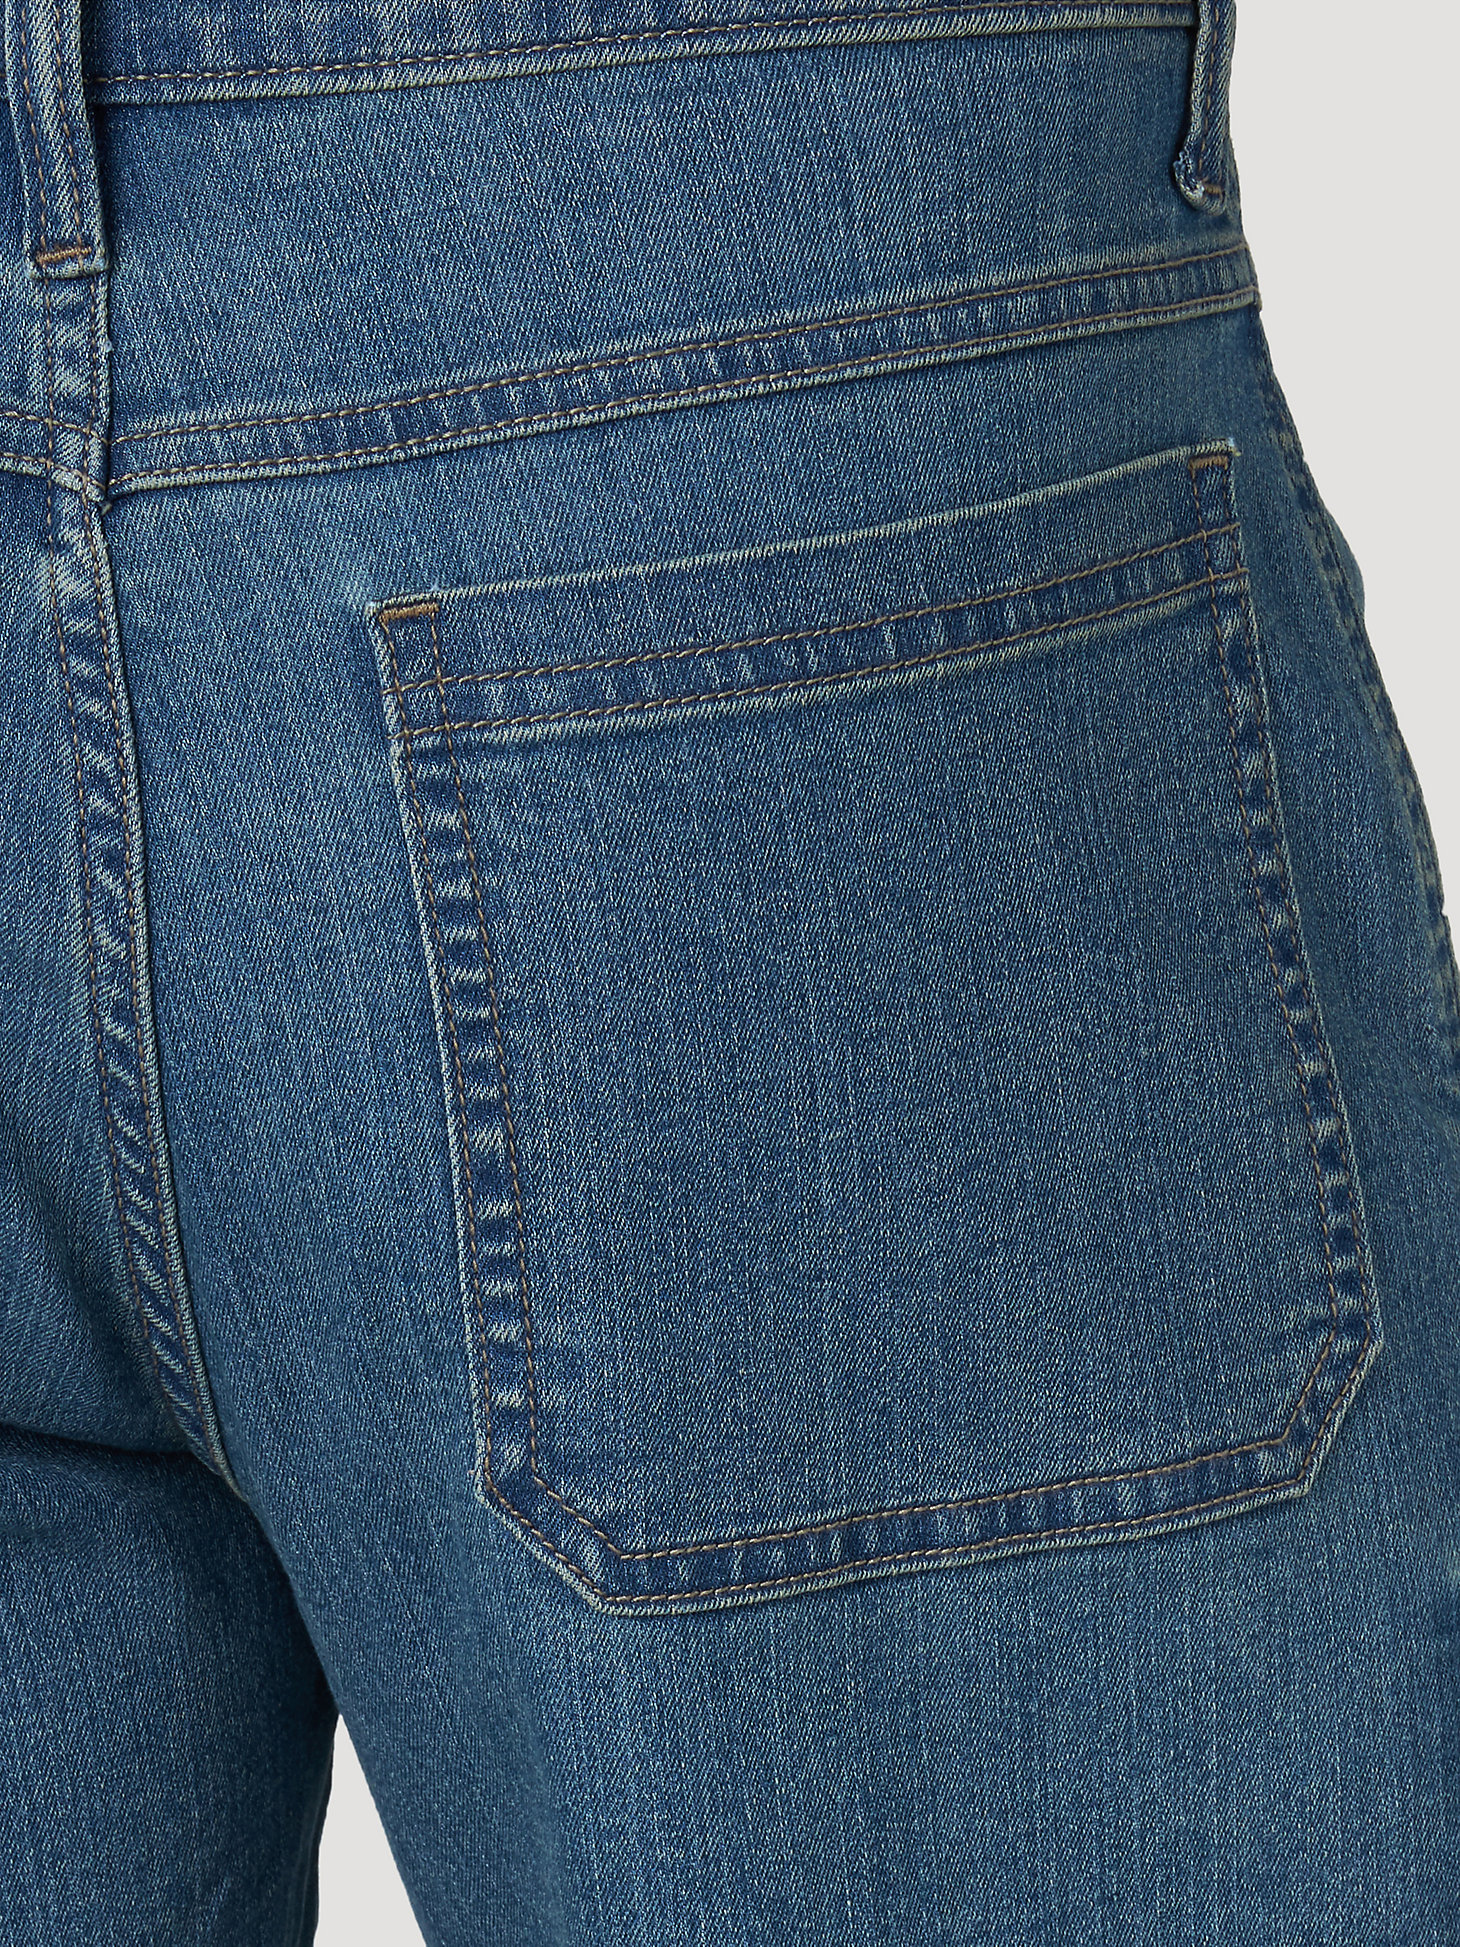 Wrangler® Men's Five Star Premium Denim Cargo Shorts in Medium Tint alternative view 5